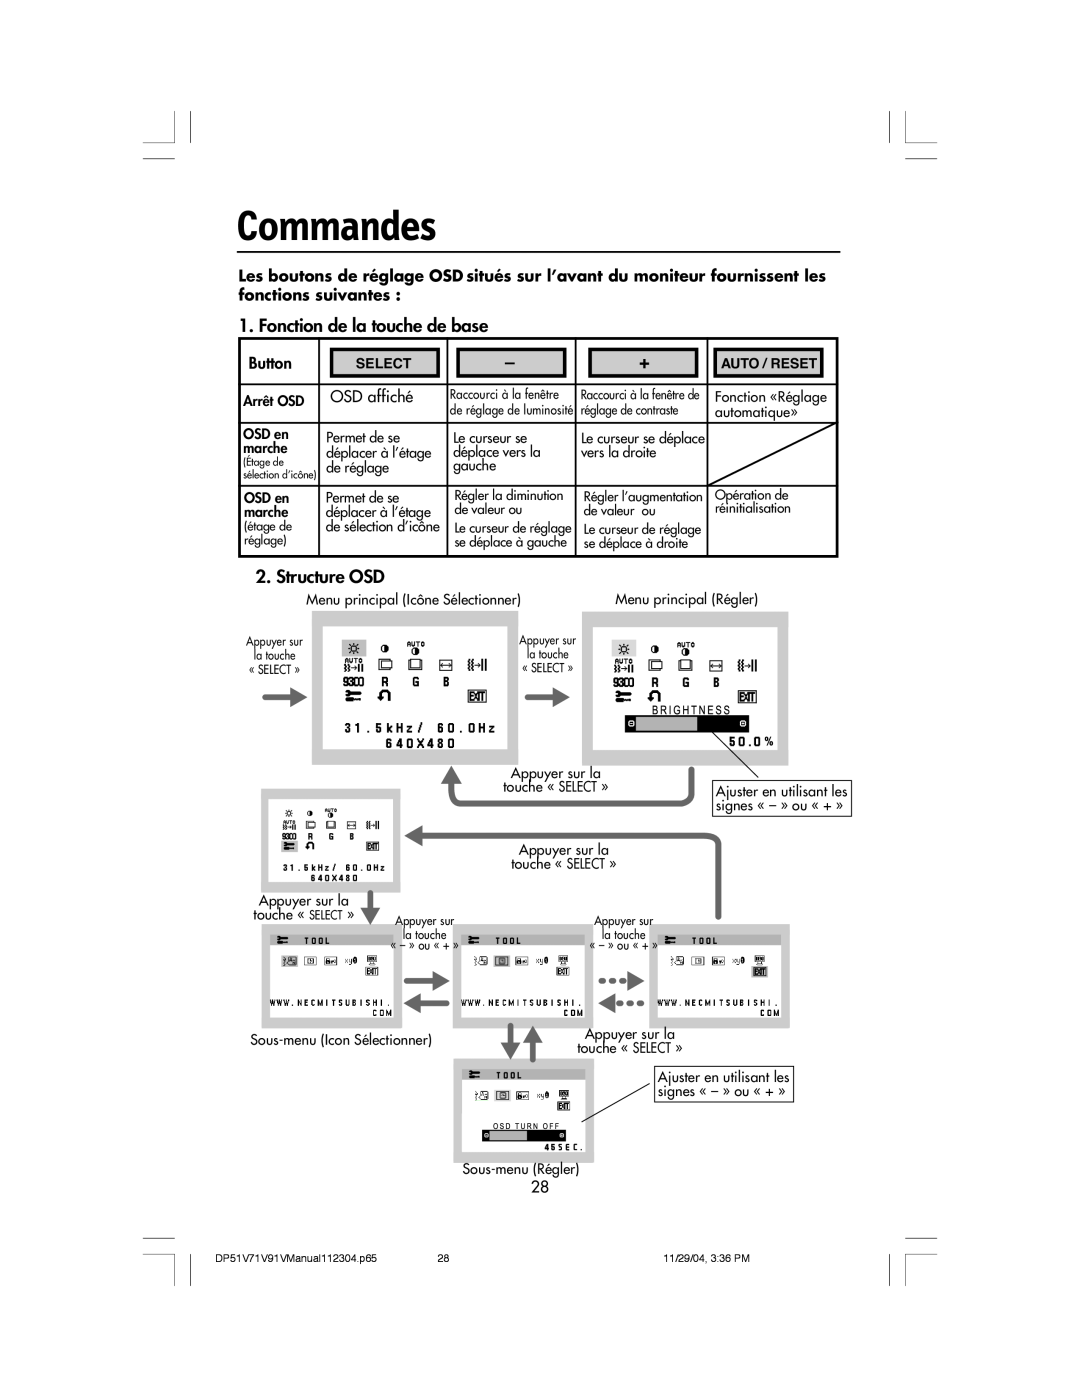 Mitsubishi Electronics V91LCD, V71LCD, V51LCD Commandes, Fonction de la touche de base, Structure OSD, Select, Auto / Reset 